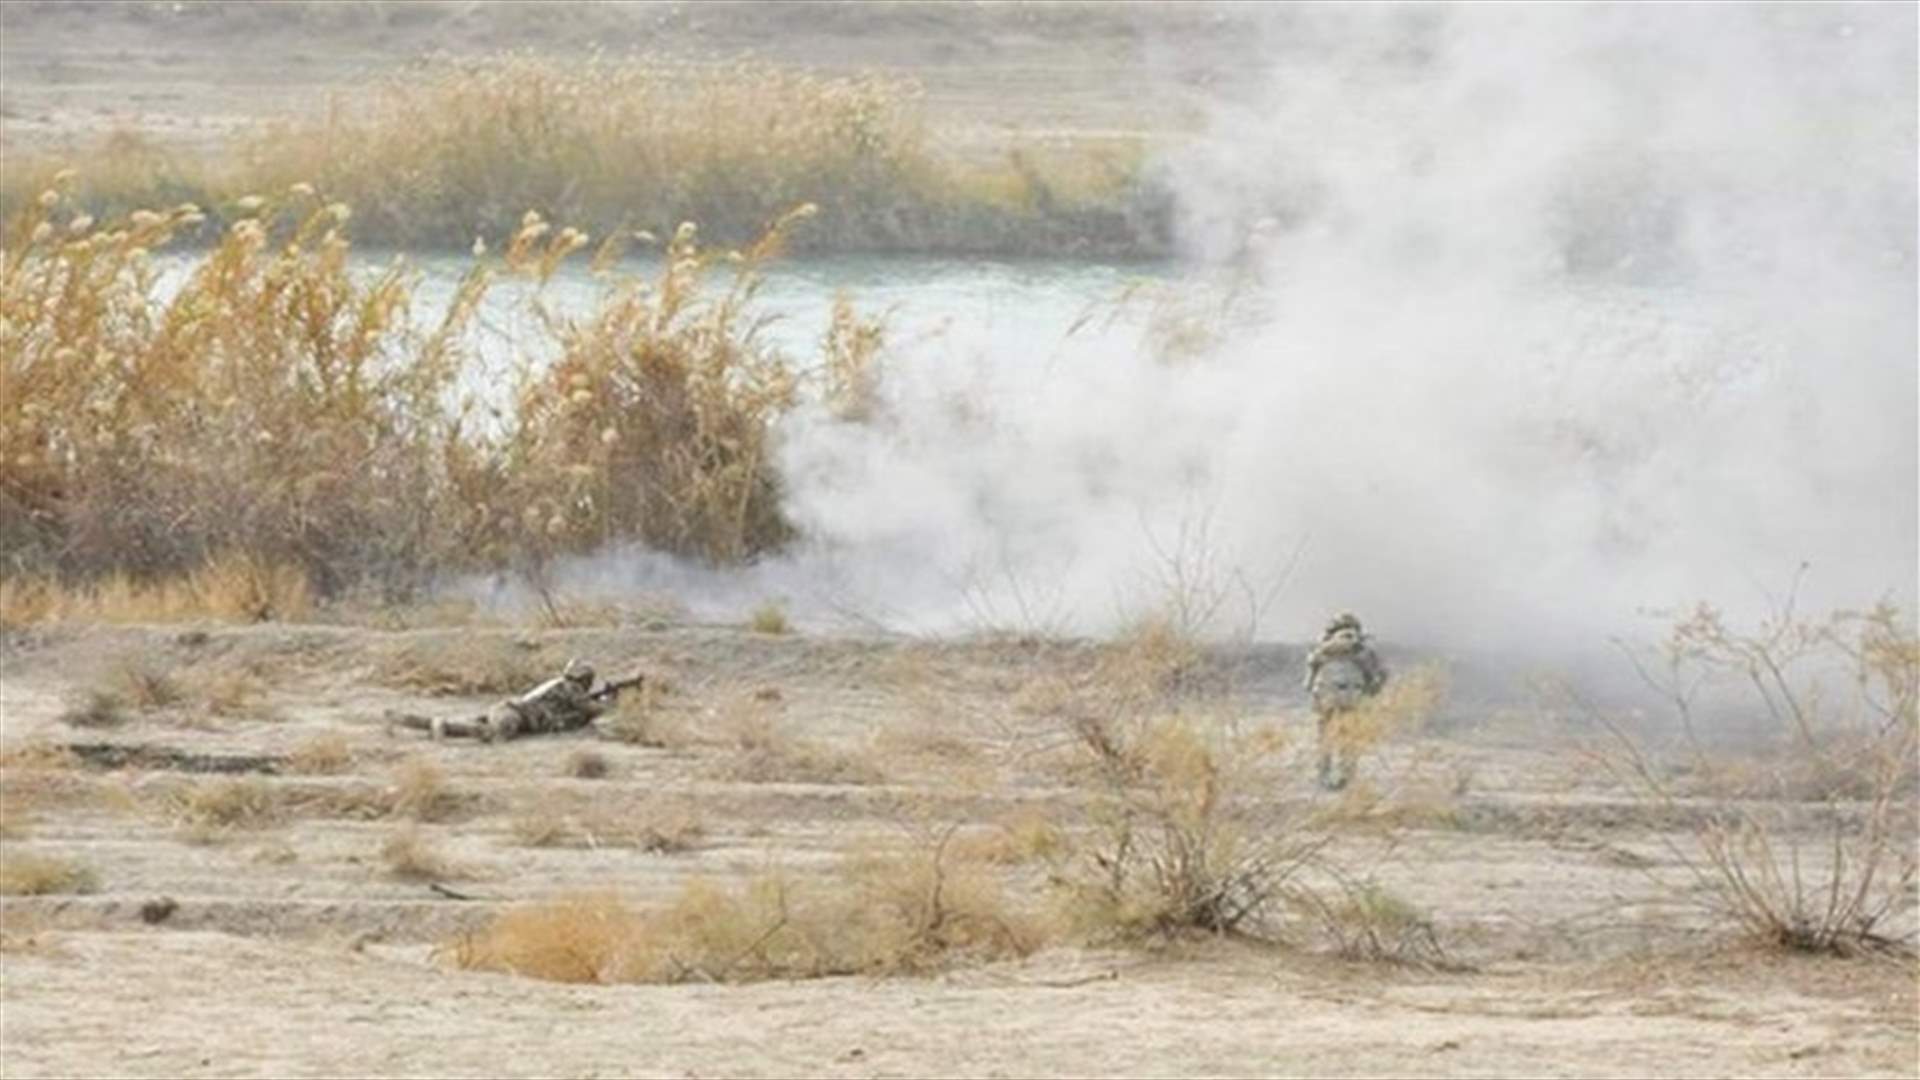 Gunmen kill 4 Iraqi soldiers at checkpoint in Anbar province